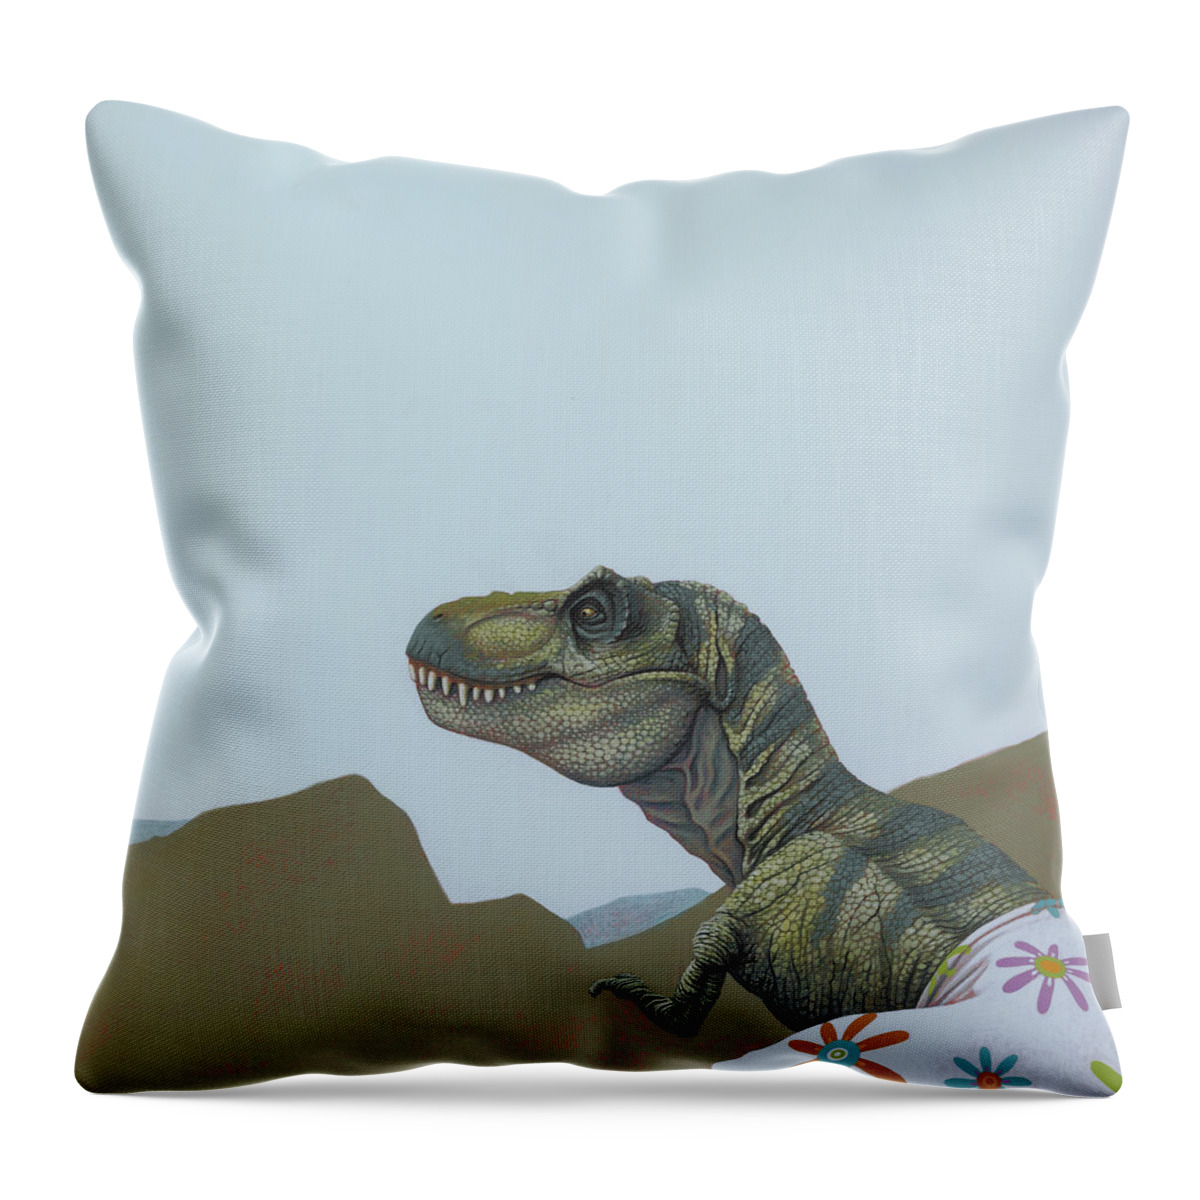 Tyranosaurus Rex Throw Pillow featuring the painting Tyranosaurus Rex by Jasper Oostland